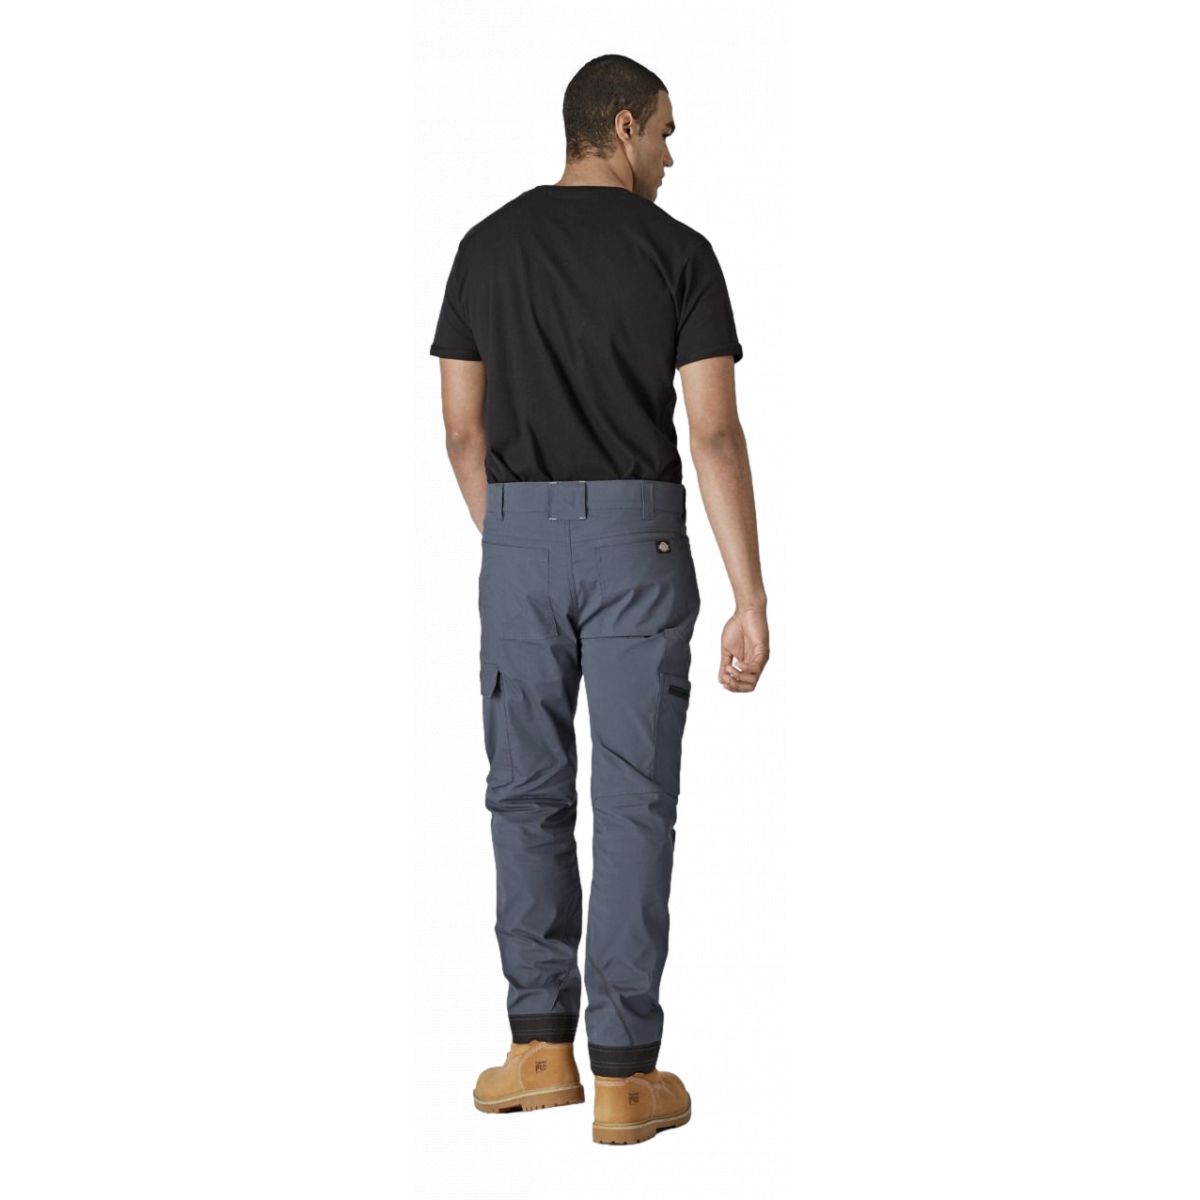 Pantalon léger Flex Gris - Dickies - Taille 52 3